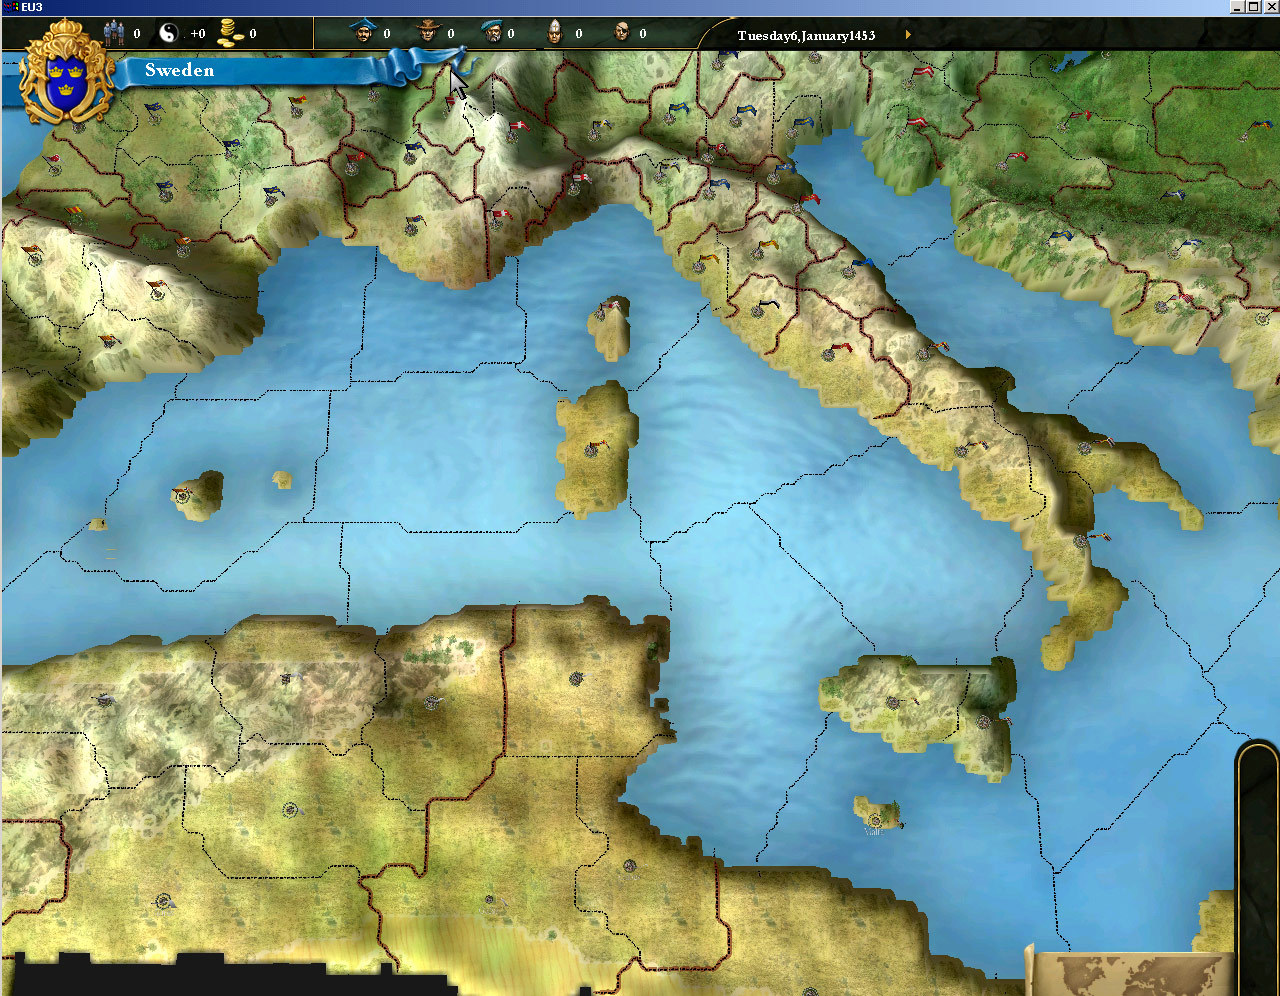 Europa Universalis III Complete Featured Screenshot #1